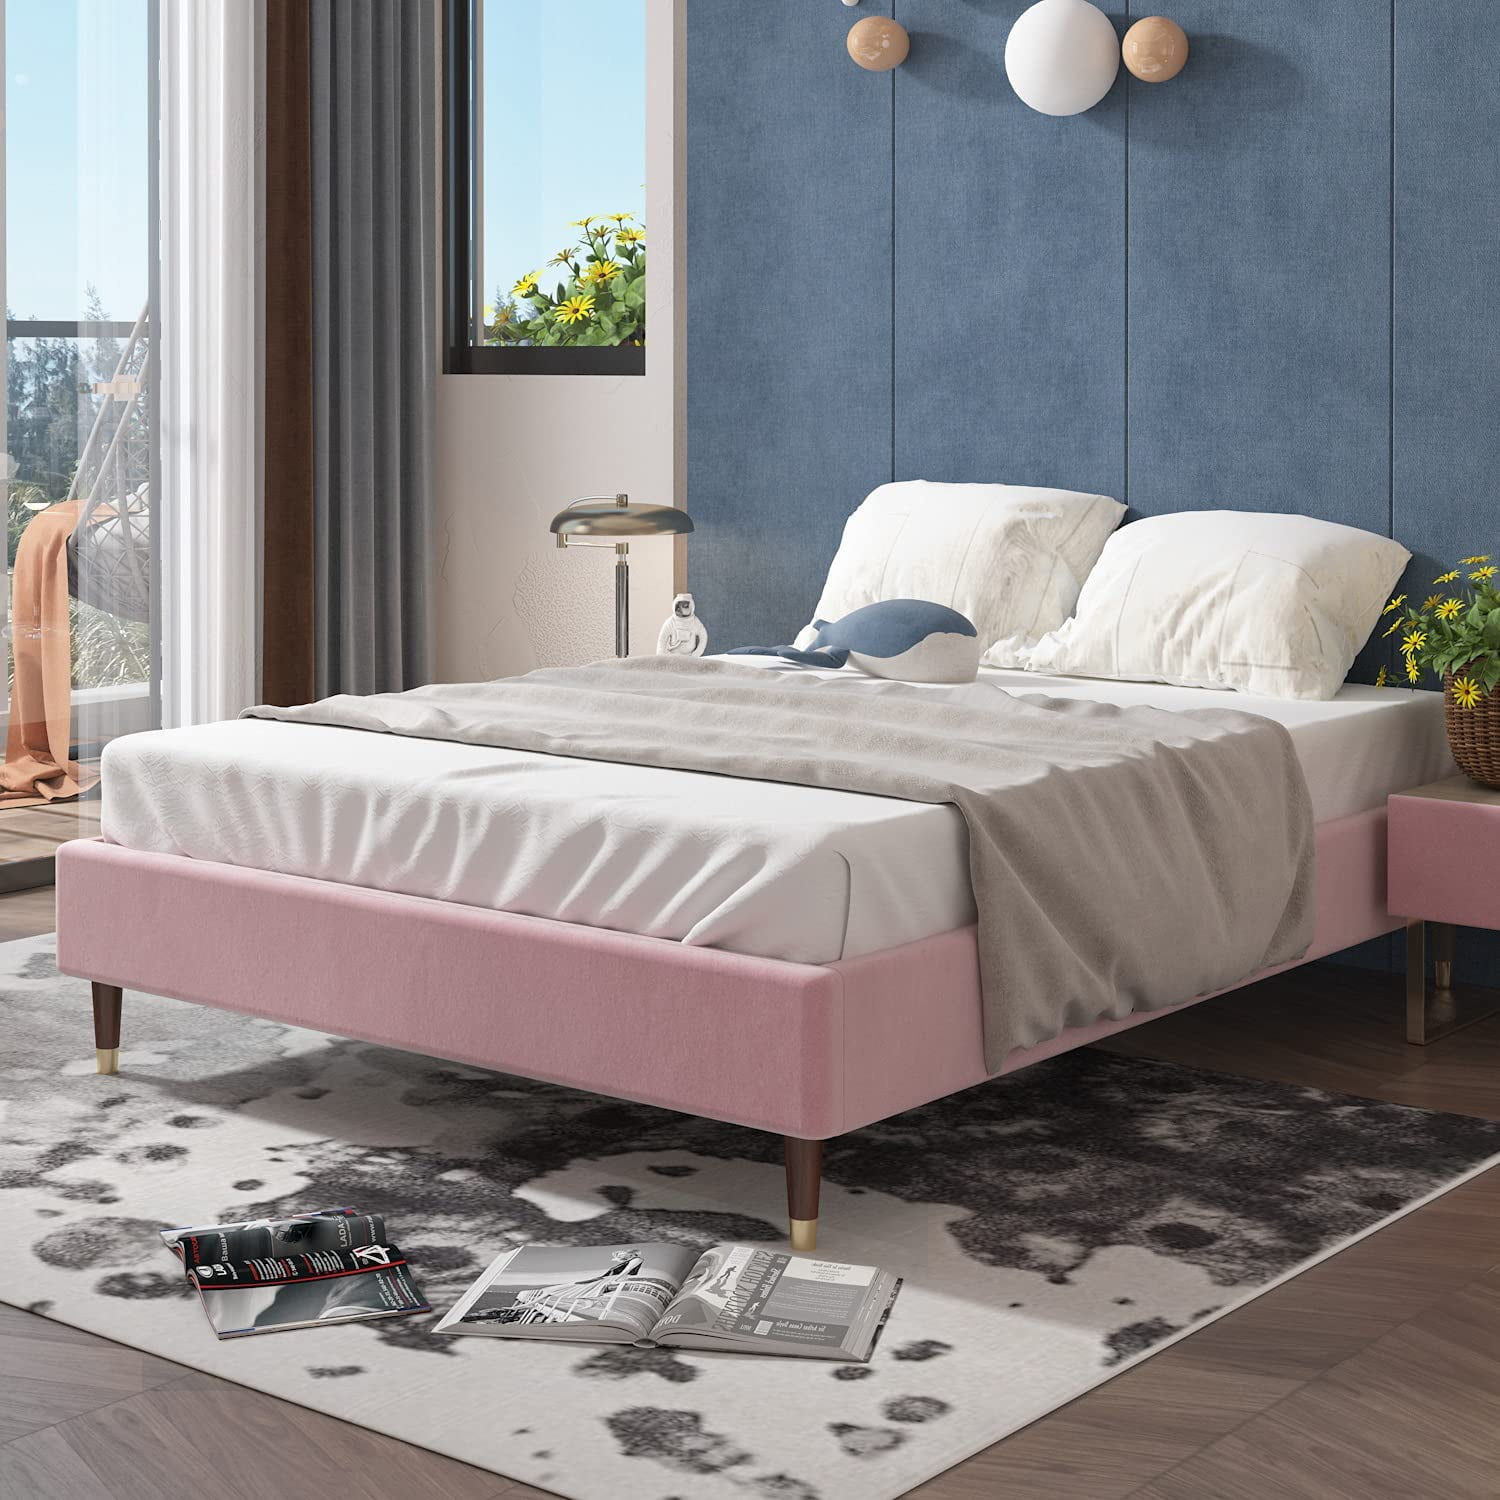 Nextfur Queen Size Pink Velvet, Plush Bed Frame